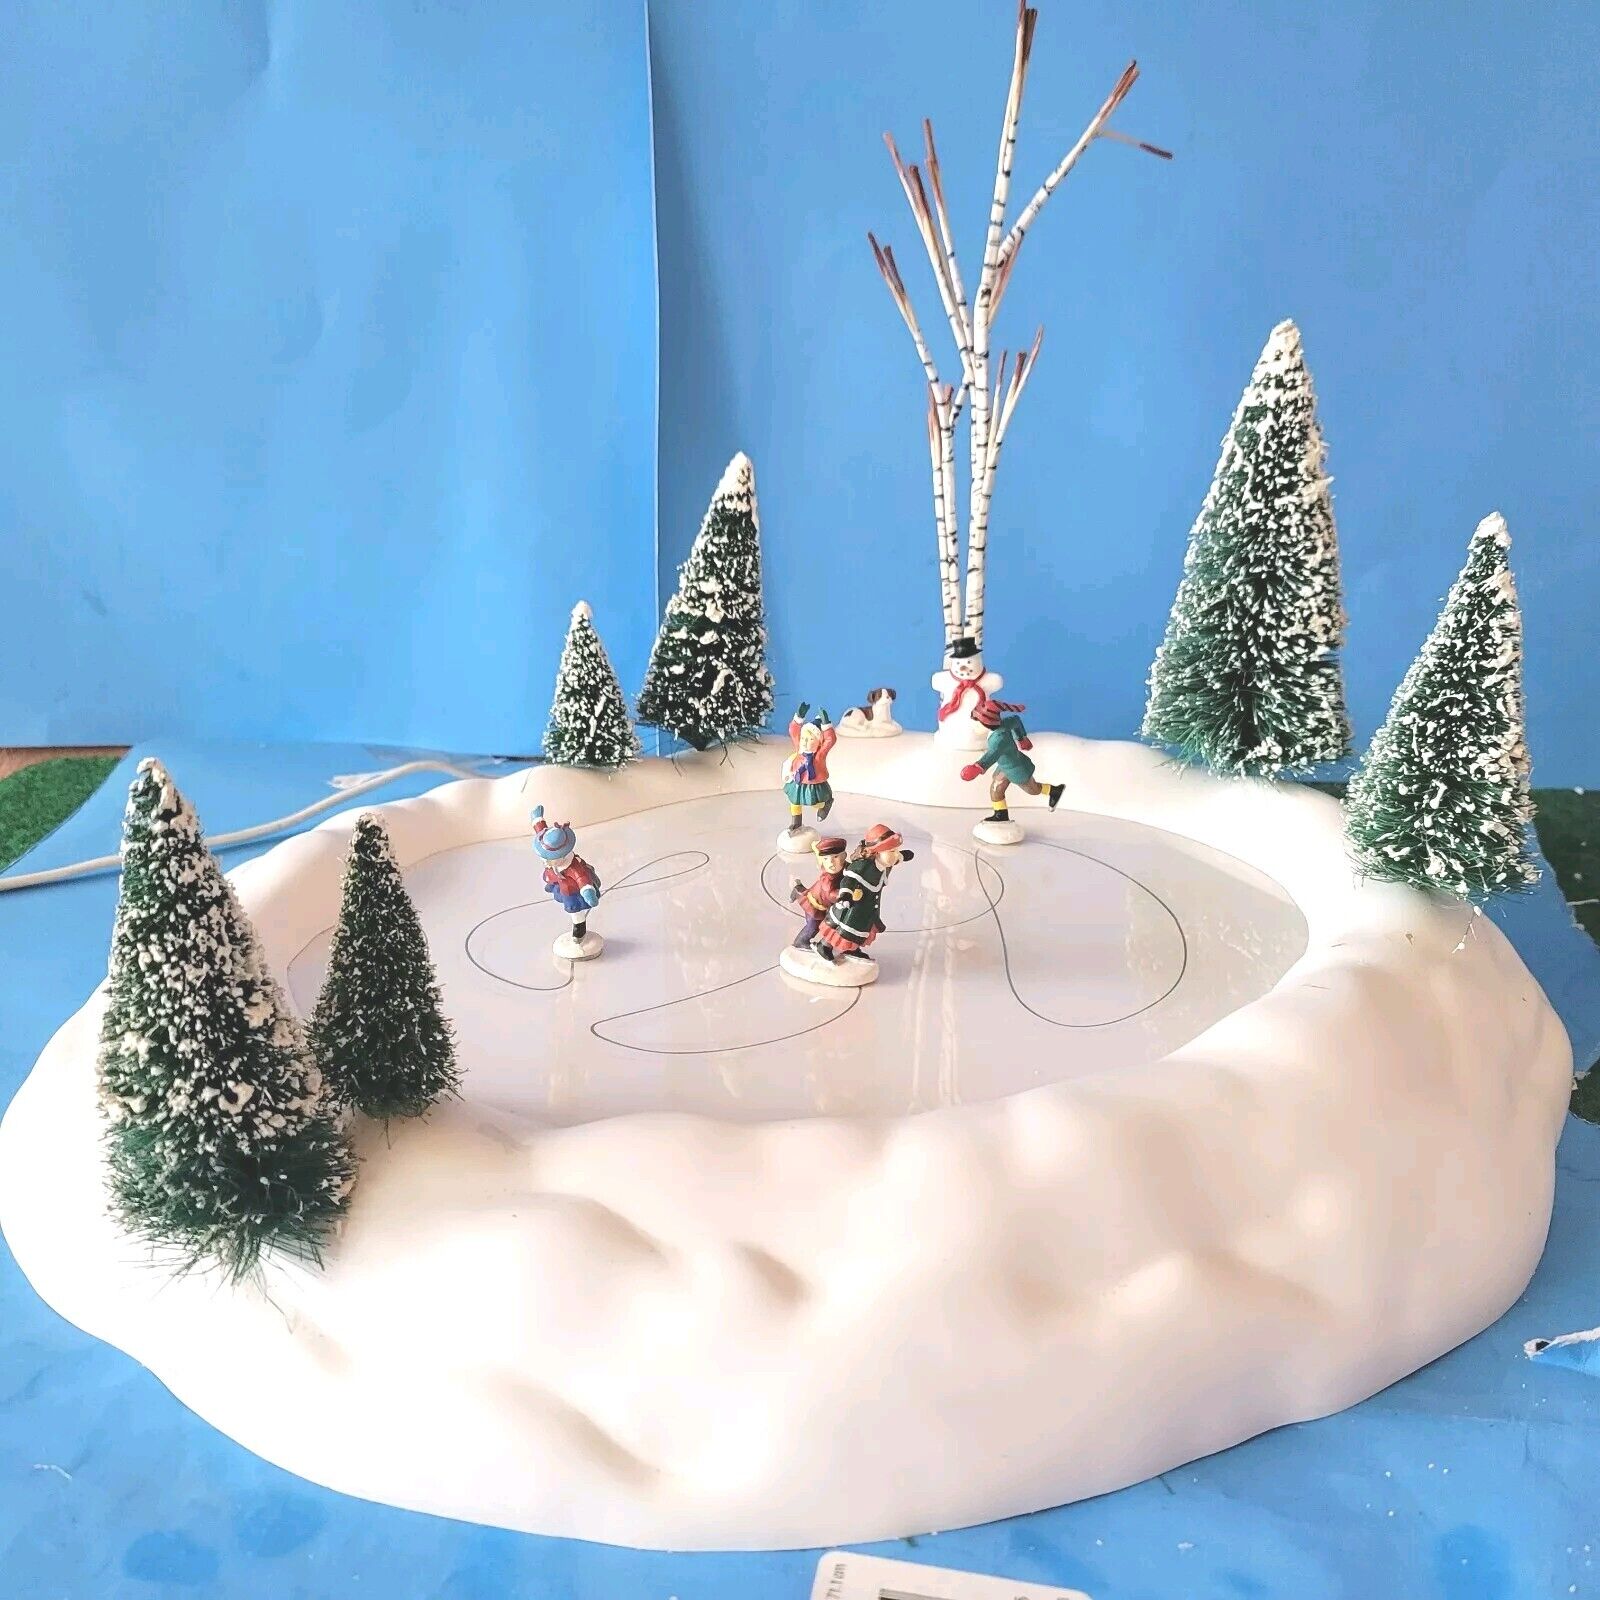 Dept 56 Christmas Village Animated Ice Skating Pond Complete Original Box Works 